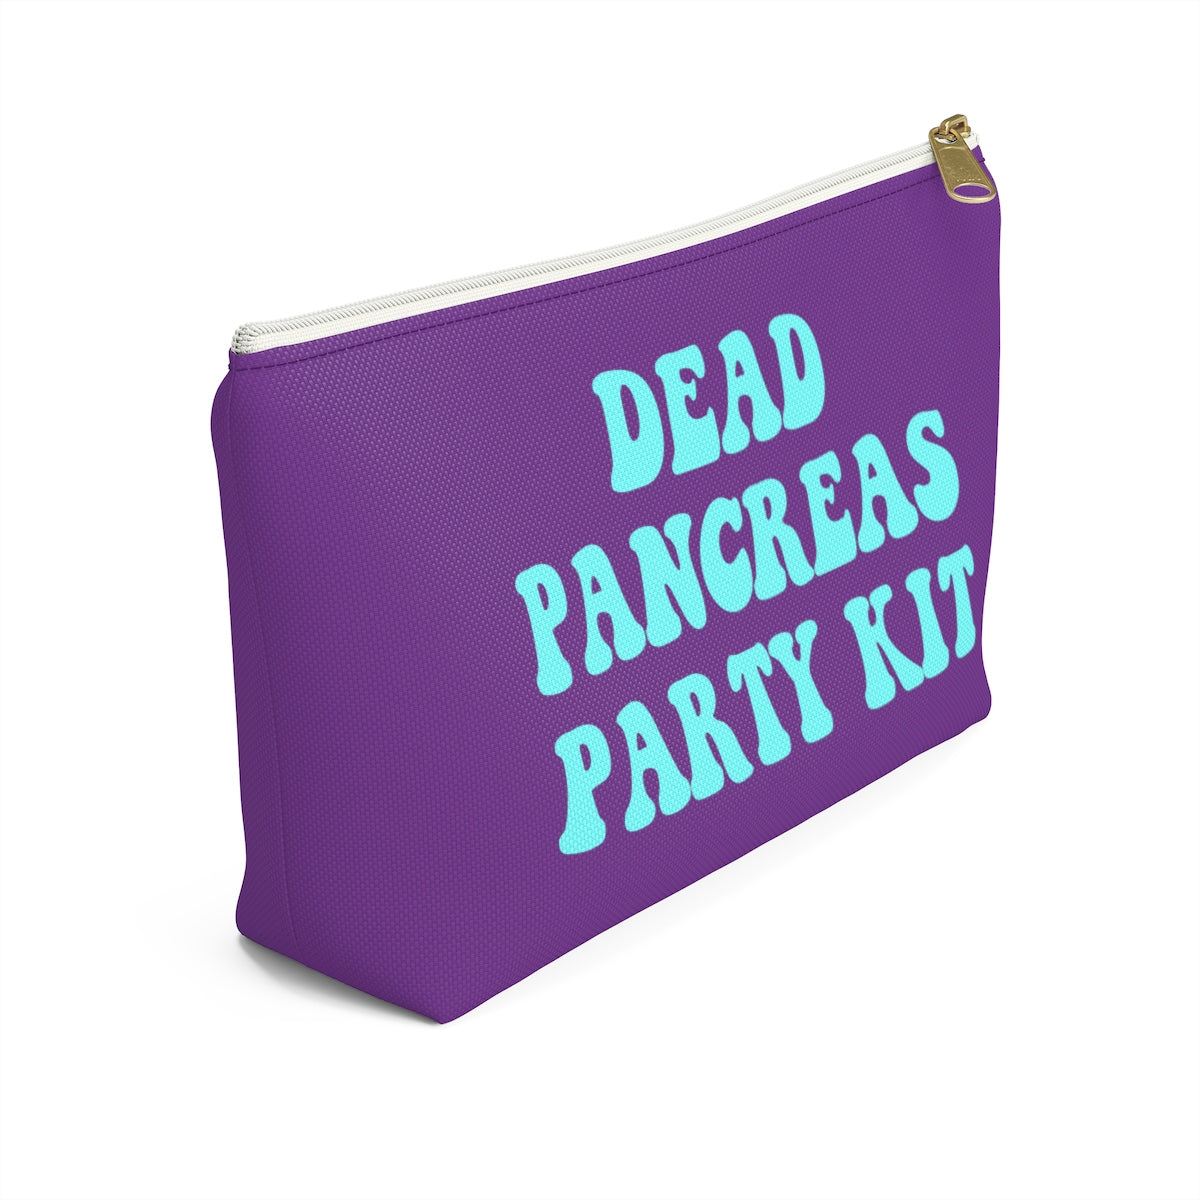 Dead Pancreas Party Kit Bag, Diabetes Supply Bag, Fun Diabetic Supply Case, Cute Carrying Bag Gift, Type 1 Diabetes Accessory Zipper Pouch w T-bottom Starcove Fashion